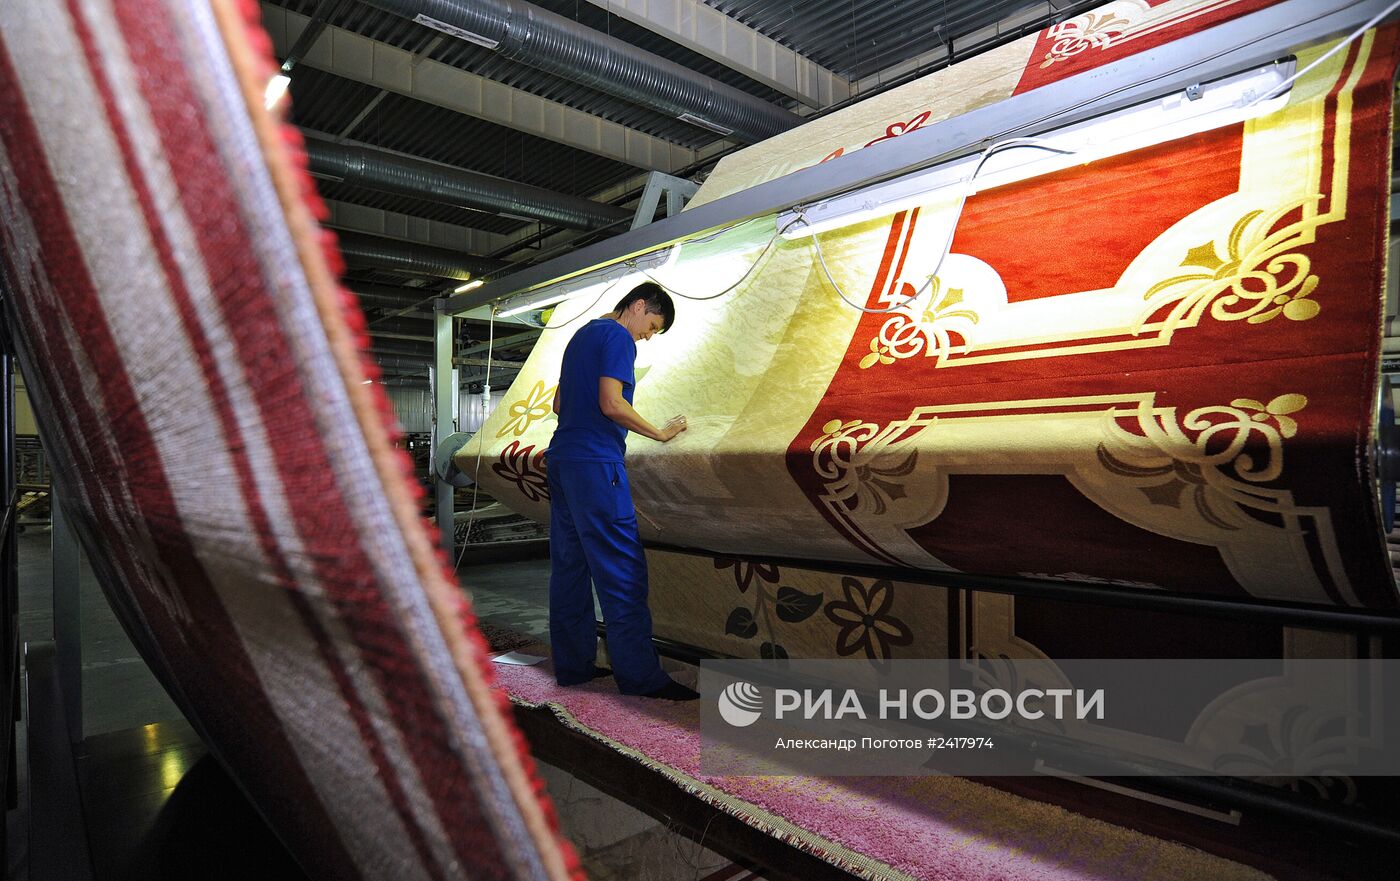 Производство ковров на фабрике в Ростове-на-Дону